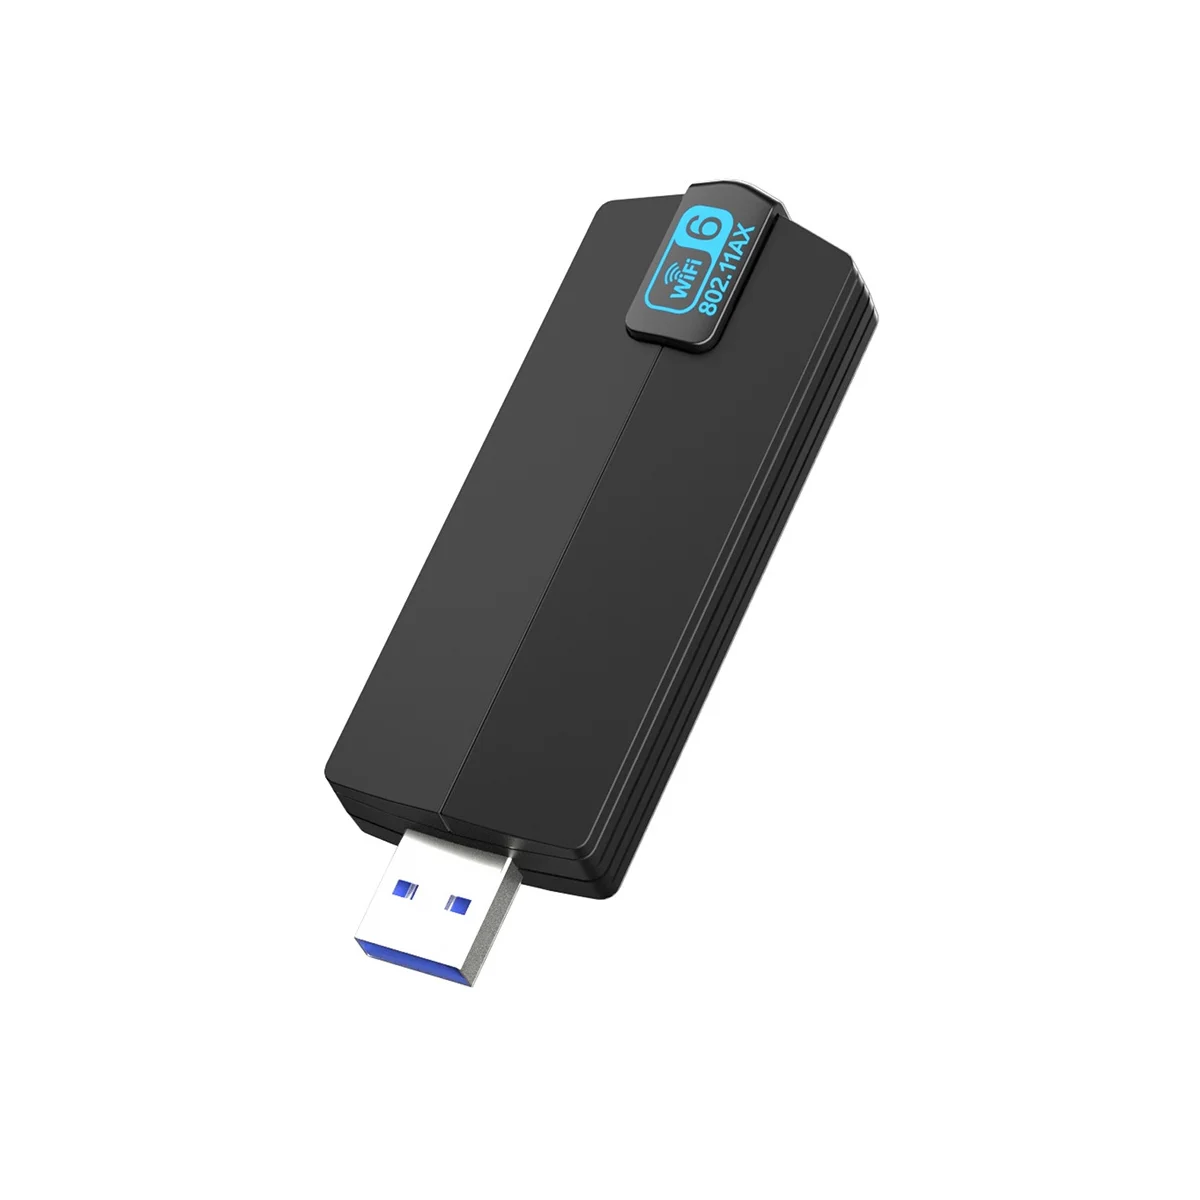 

AX1800M USB Wifi6 Wireless Network Card WiFi 6 USB Adapter USB3.0 Dual Band 2.4GHz/5GHz High-Speed Network Card